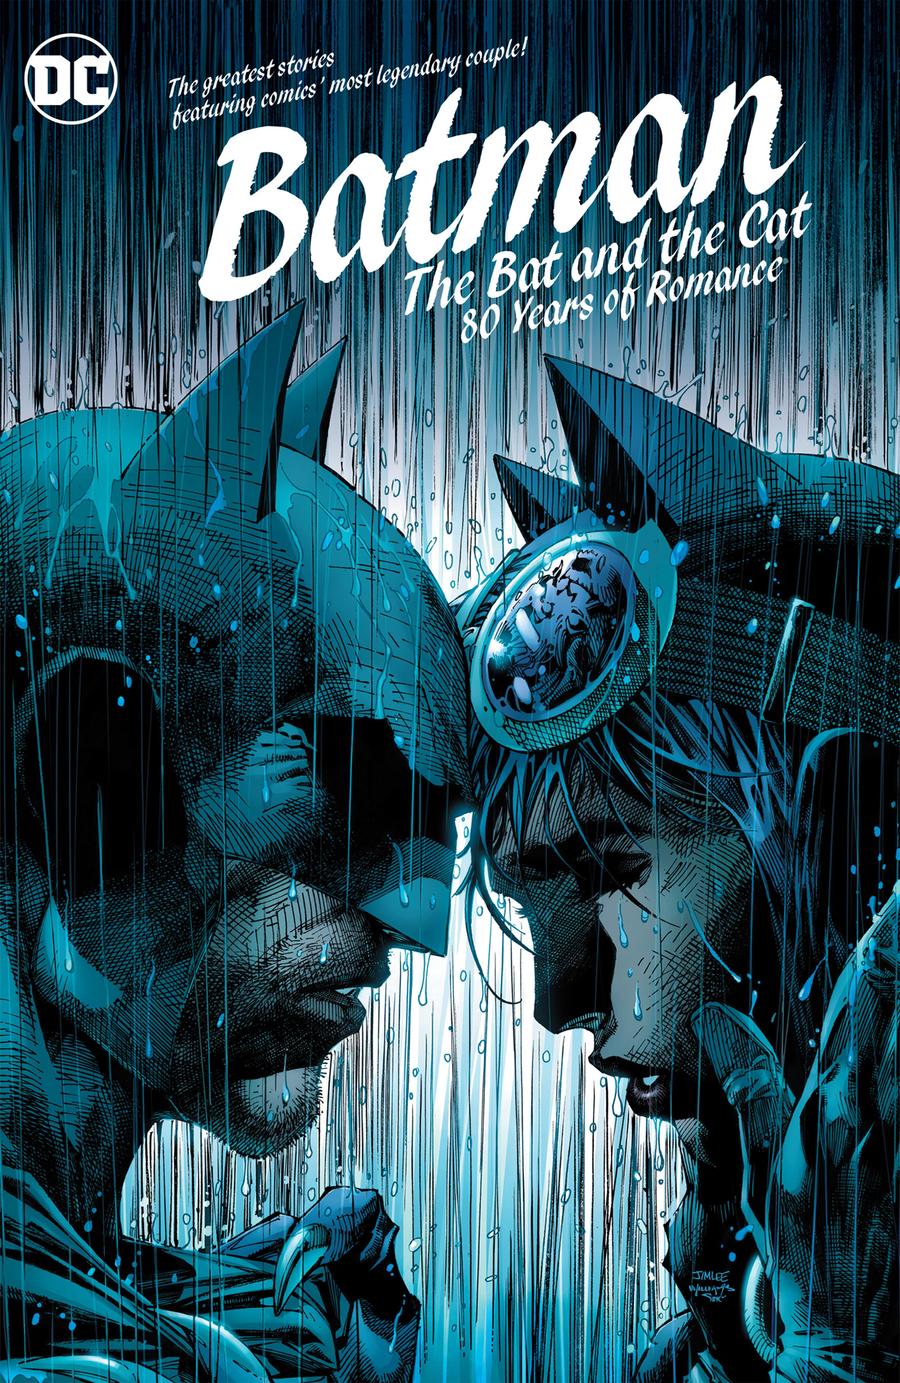 Batman The Bat And The Cat 80 Years Of Romance HC